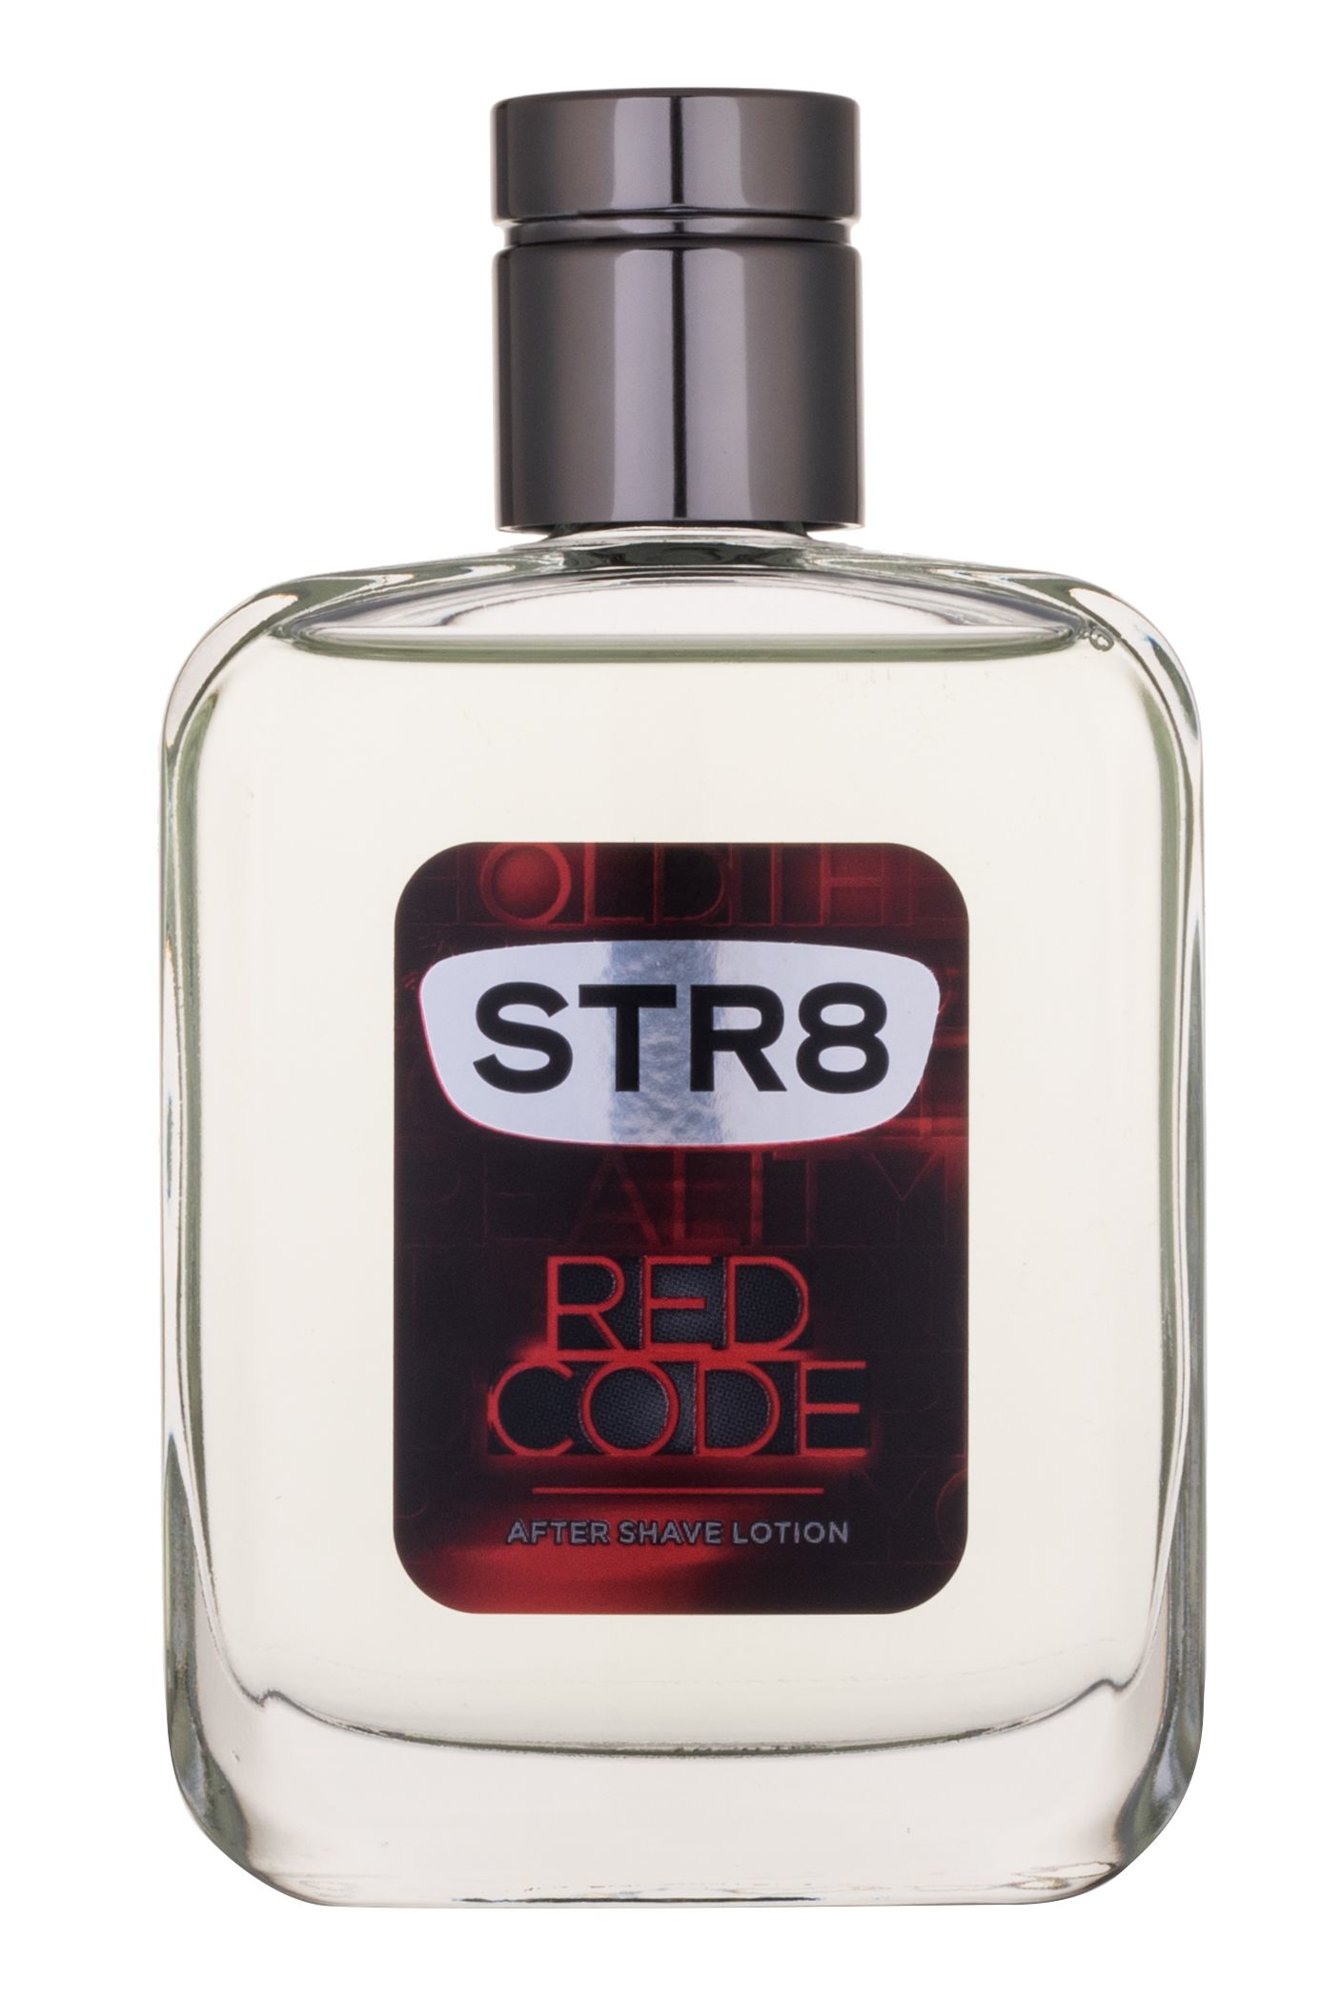 STR8 Red Code 100ml vanduo po skutimosi